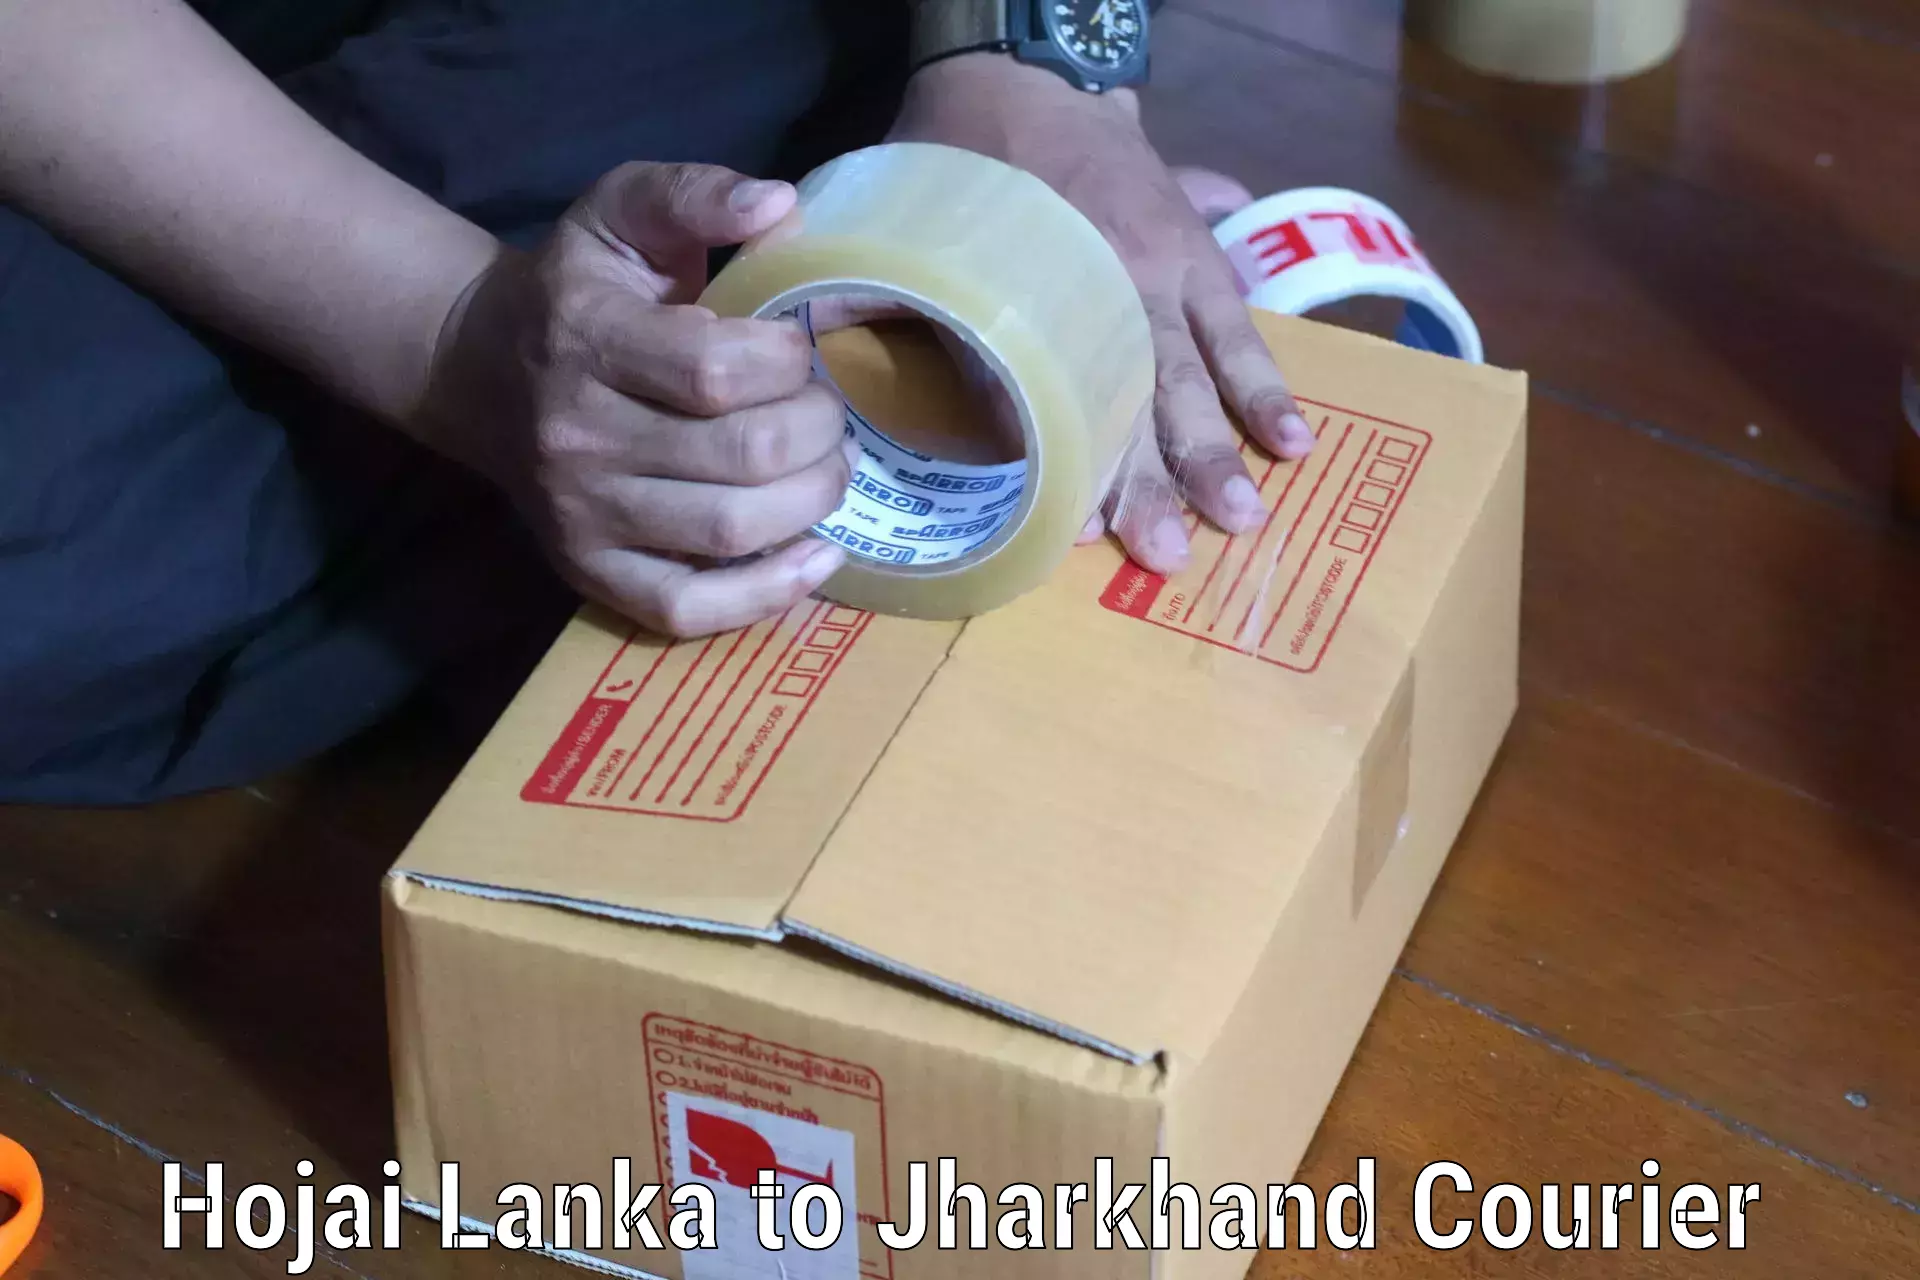 24/7 courier service Hojai Lanka to Jagannathpur